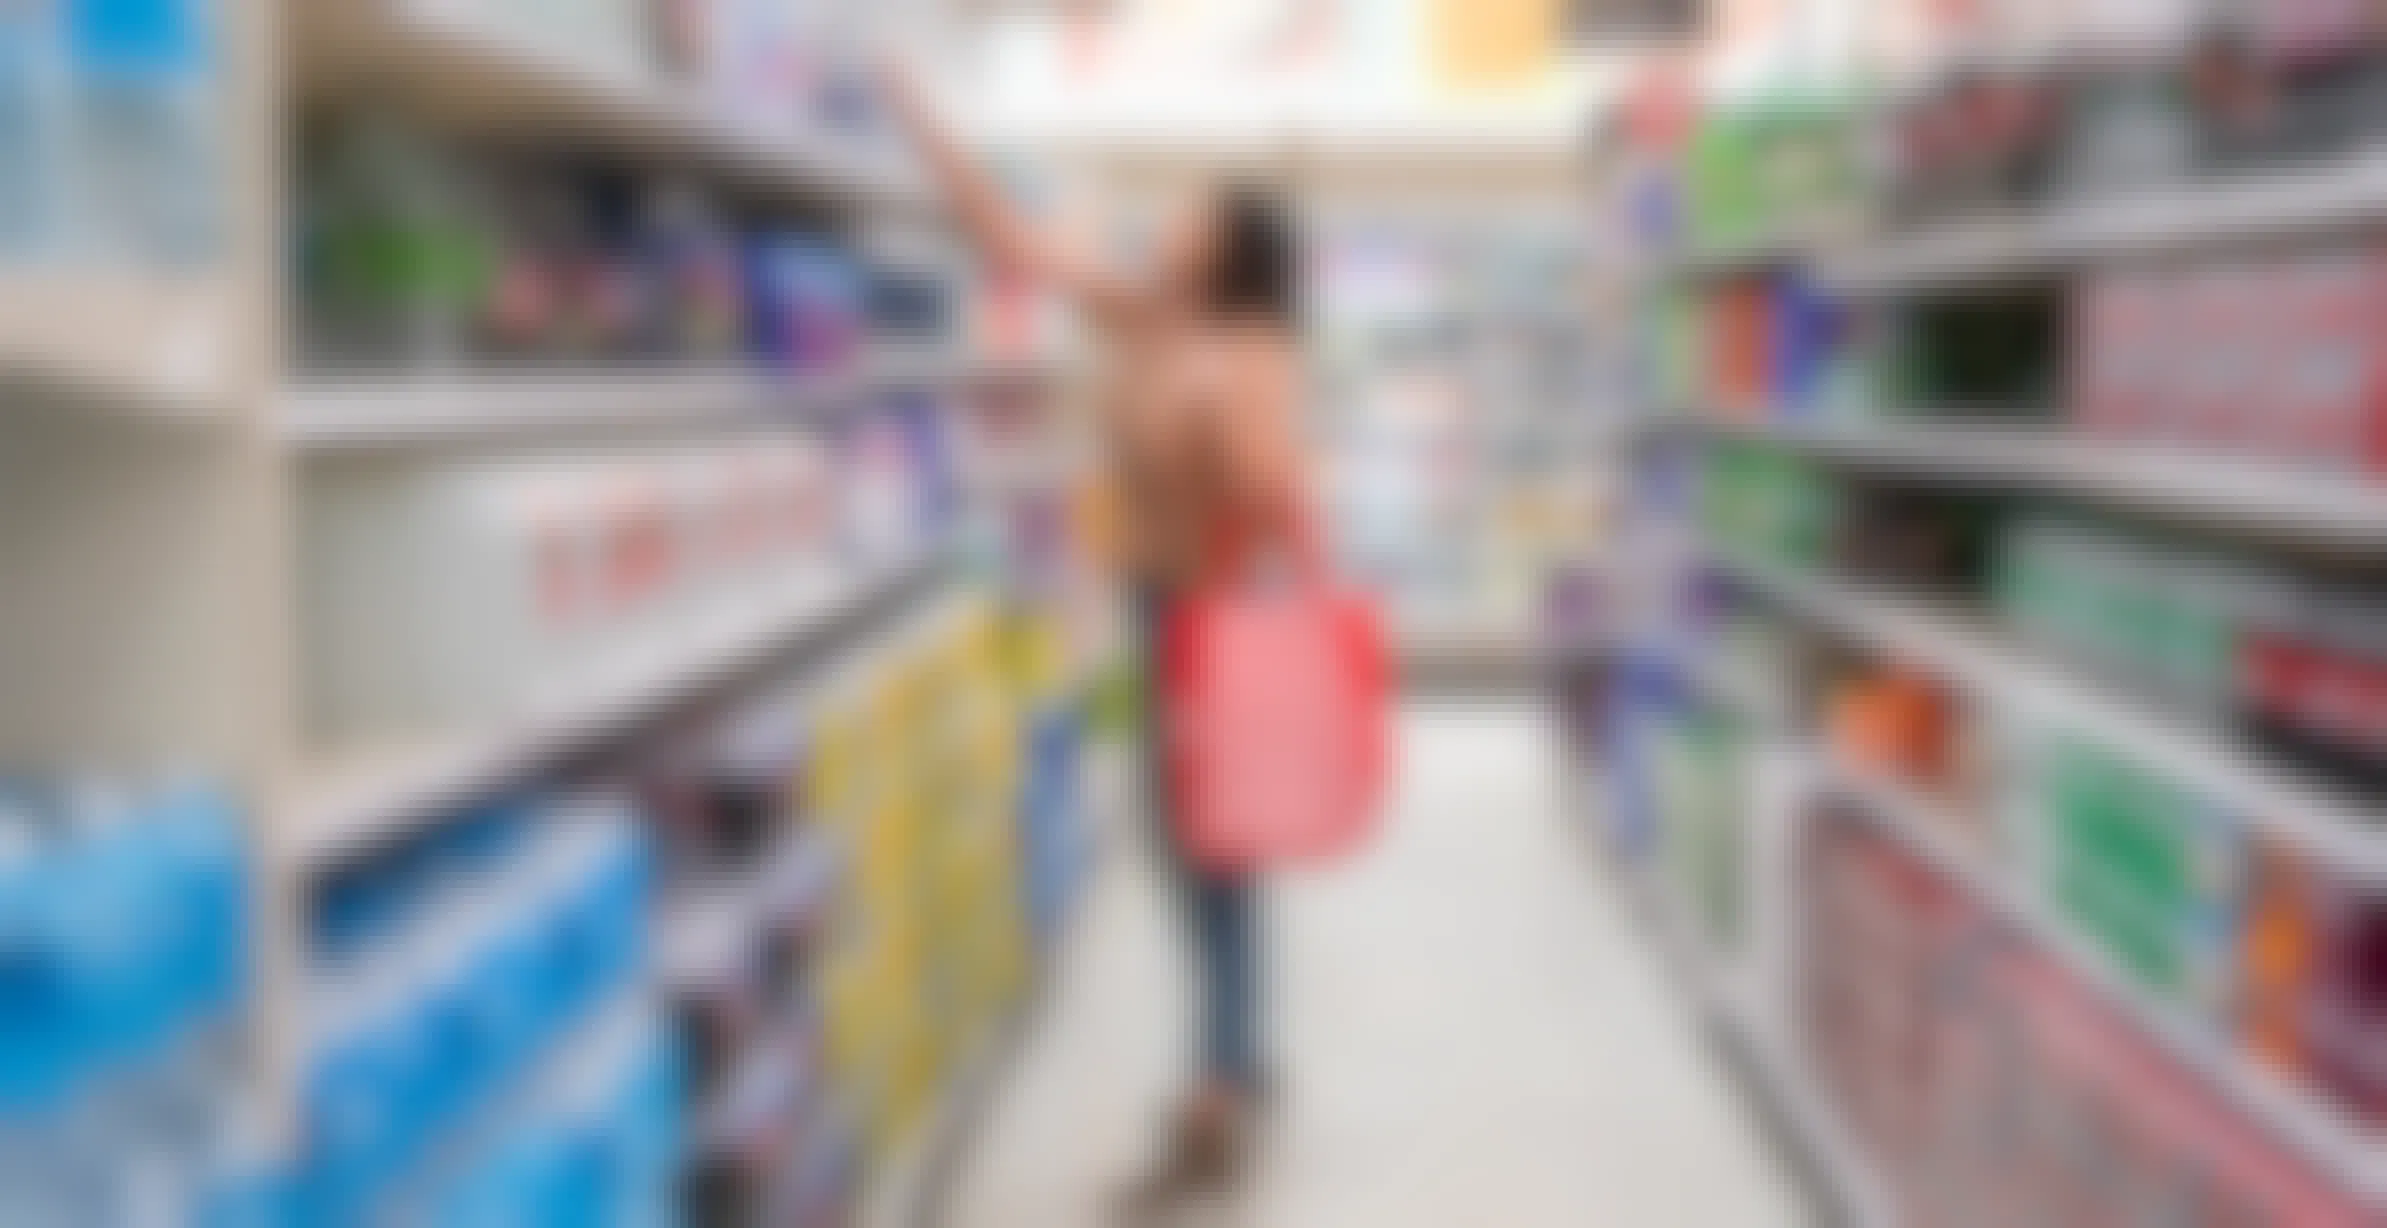 10 Easy Ways to Get Free Things at Target